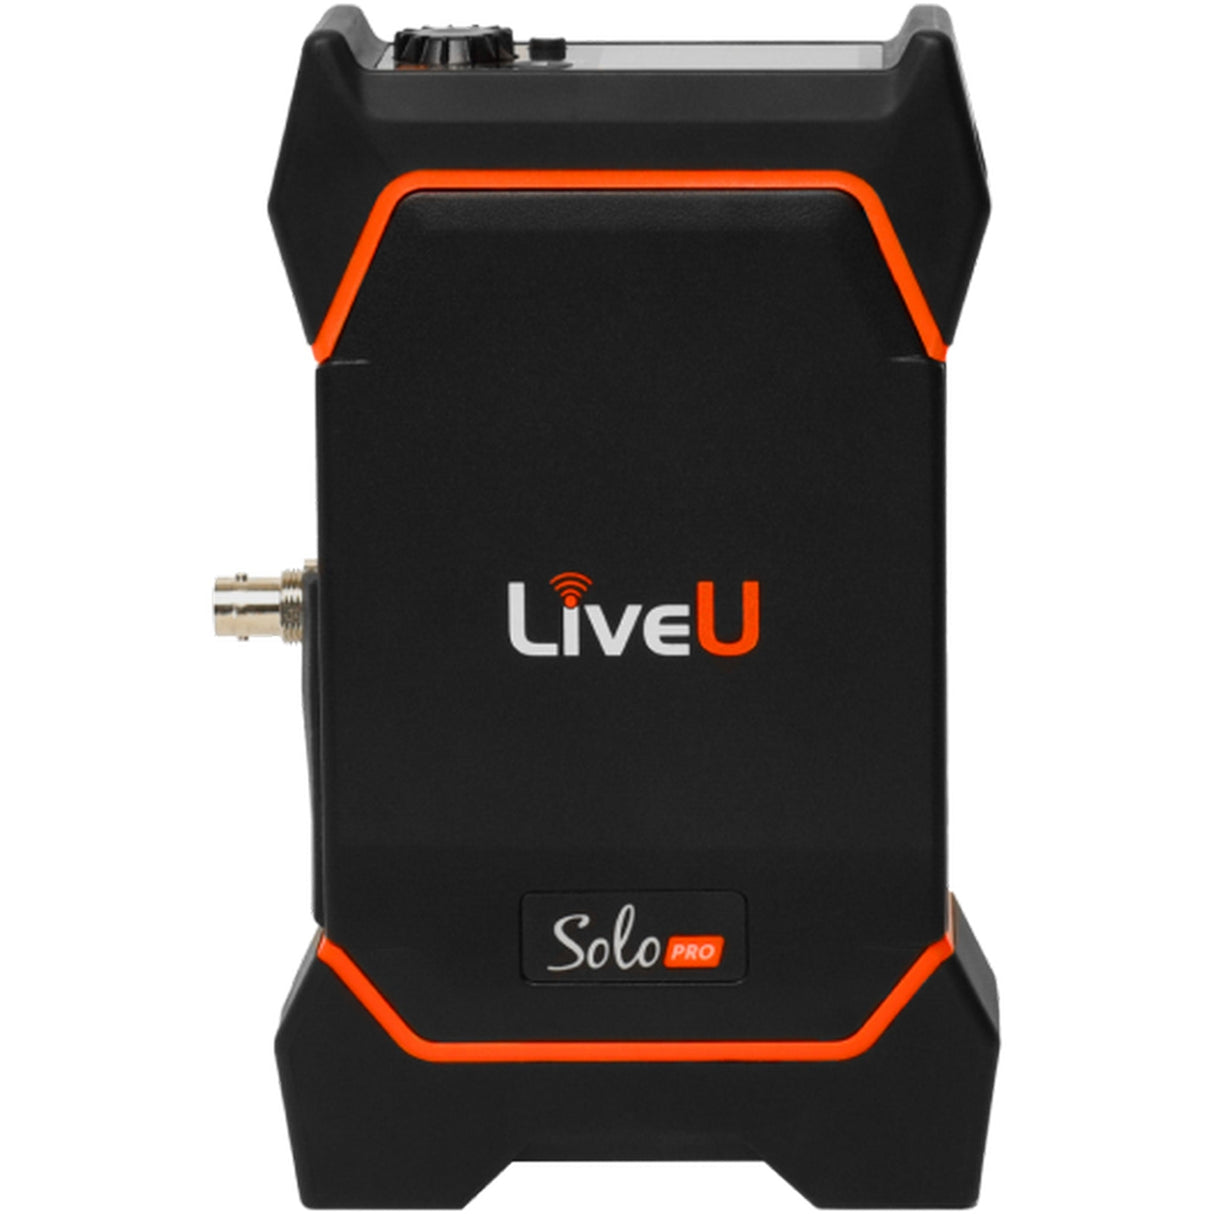 LiveU Solo Pro HDMI 4K Live Video/Audio Encoder